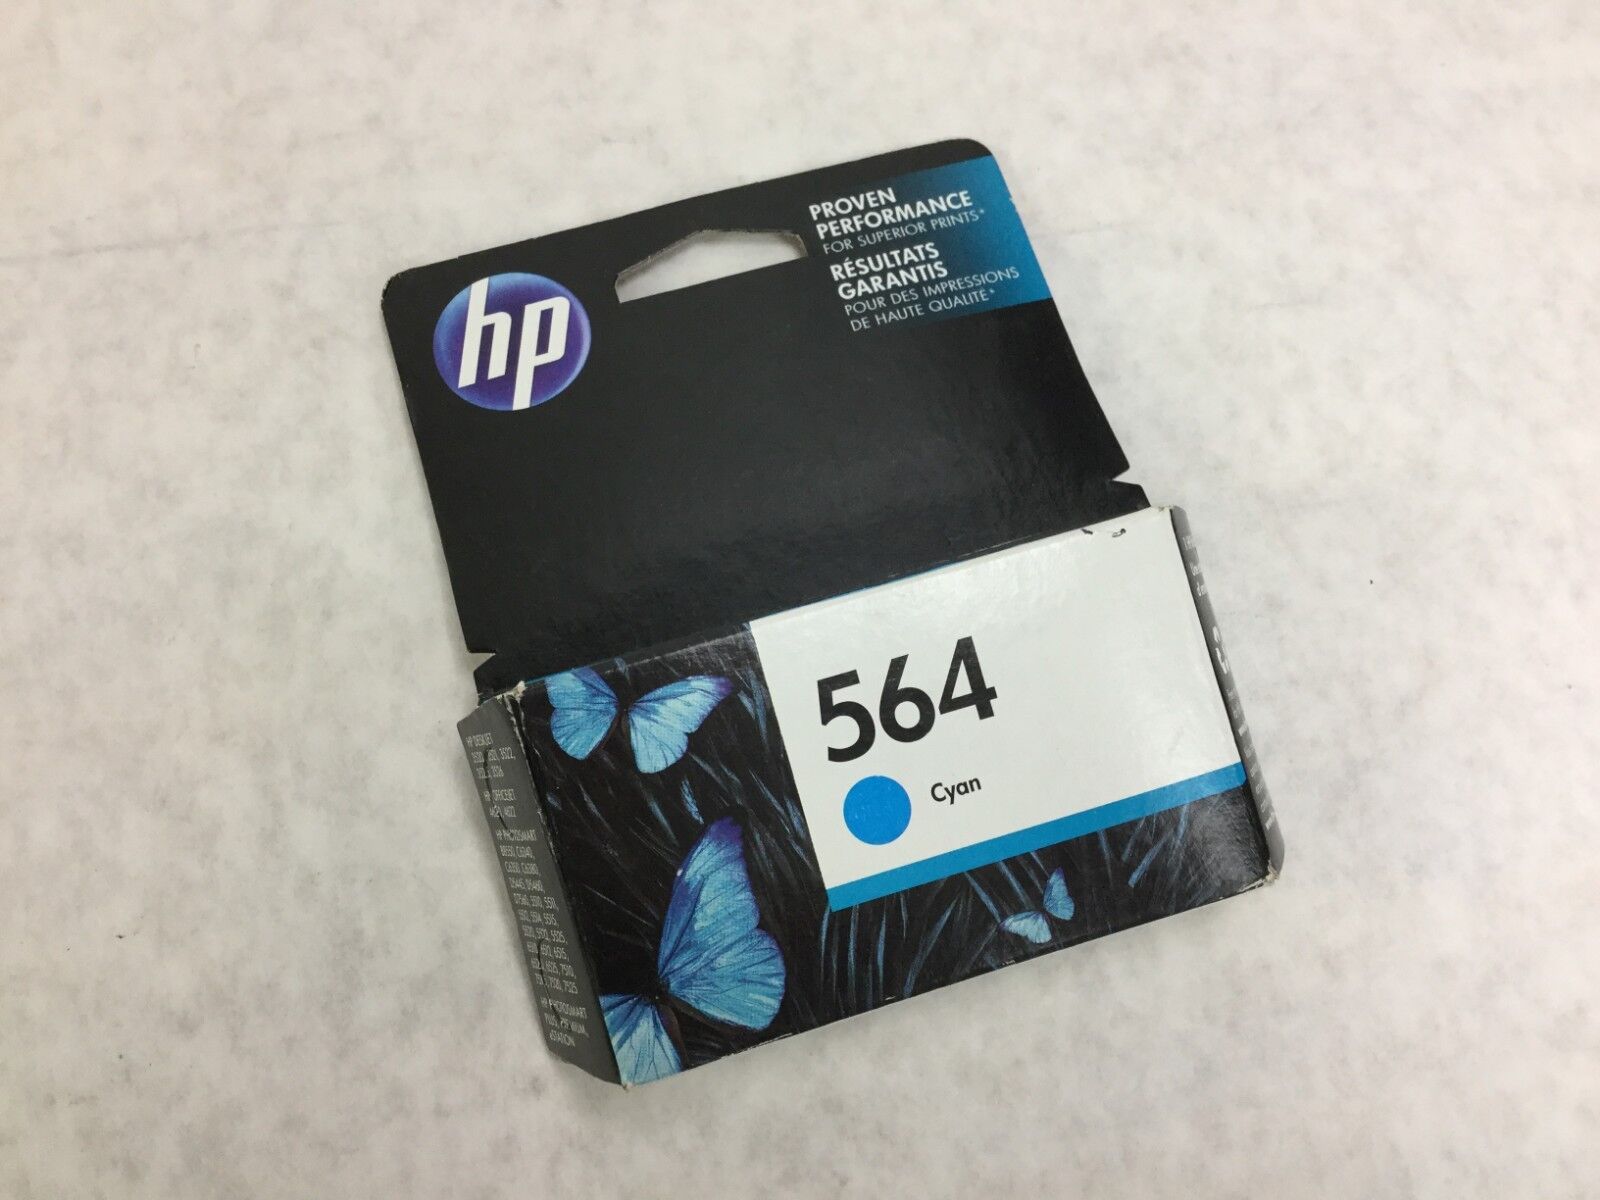 Genuine HP 564 Cyan CB318WN Warranty End Date Jul 2017  Factory Sealed  NIB